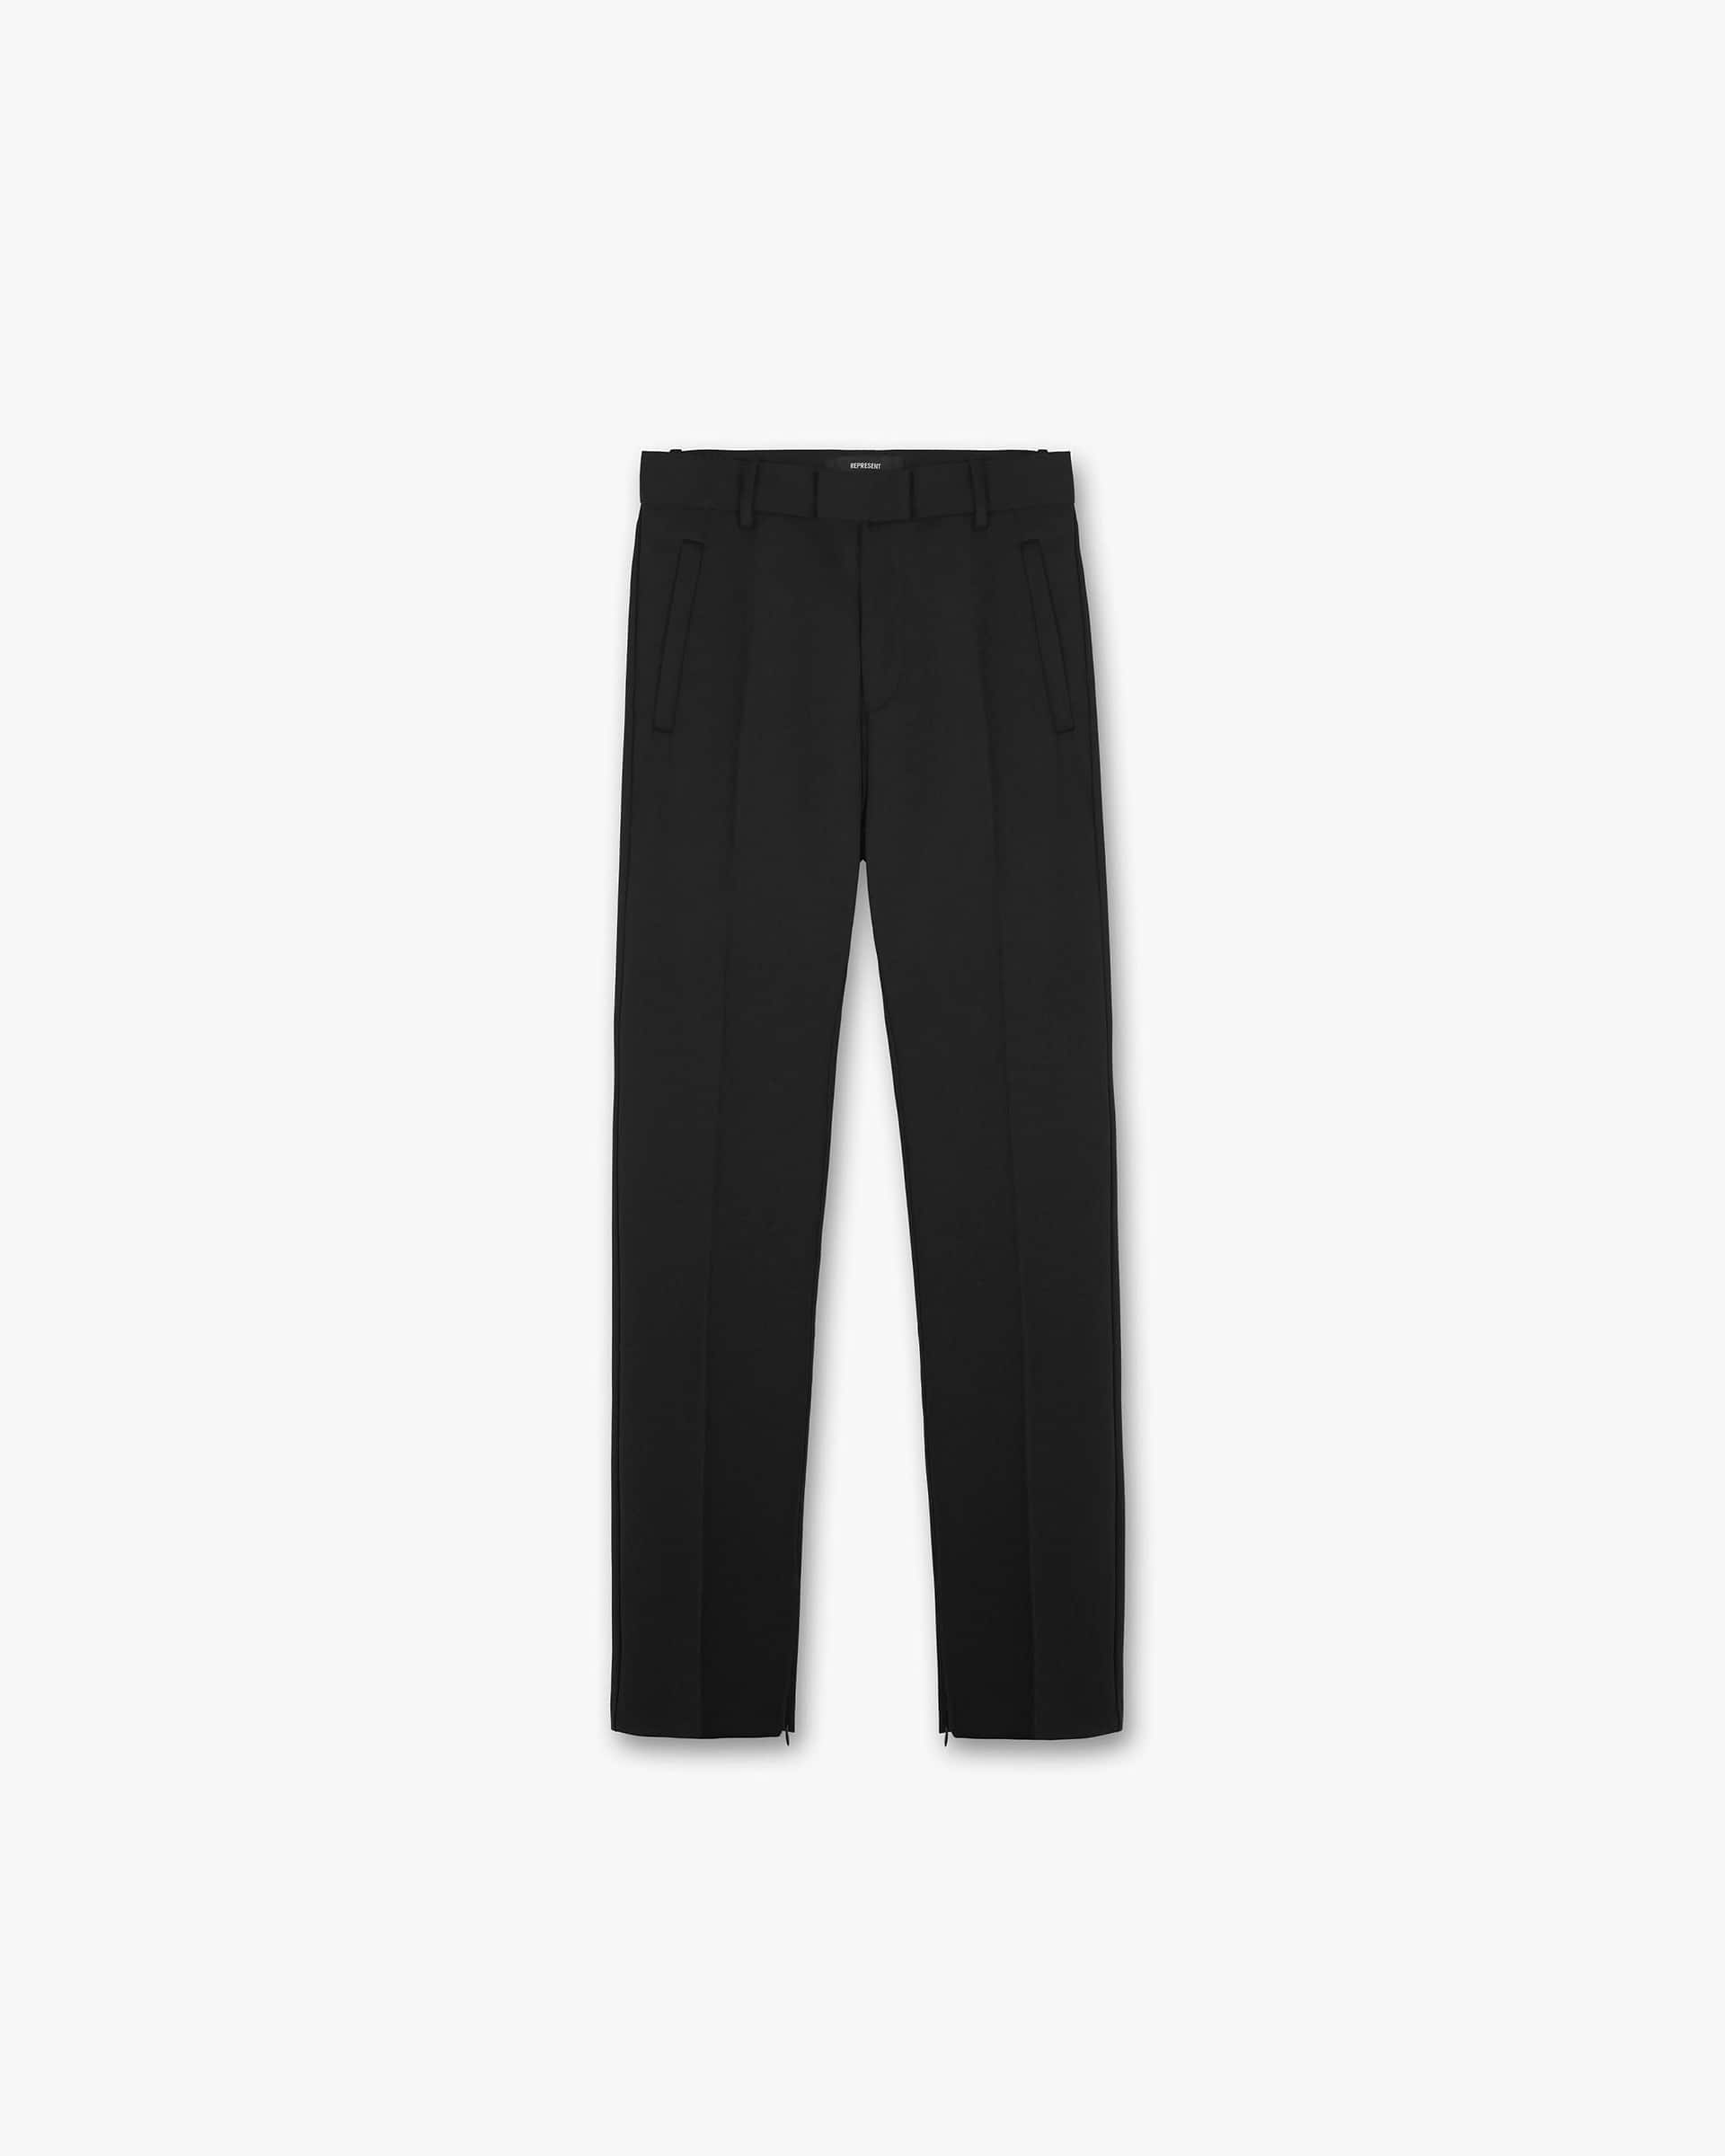 Tailored Pant | Black Pants FW21 | Represent Clo